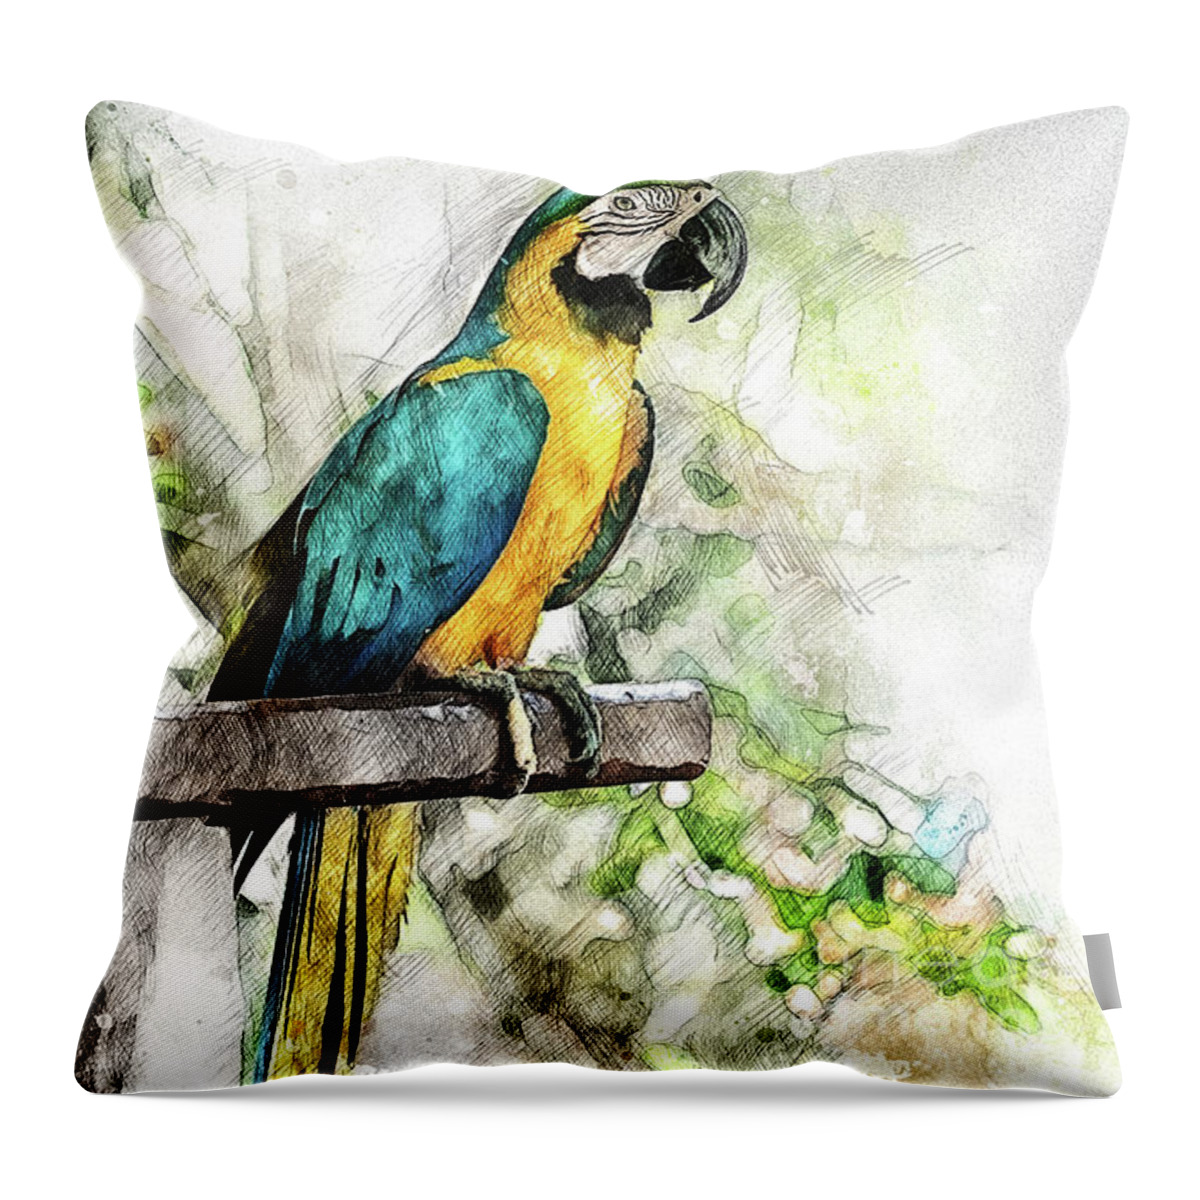 Costa Maya Throw Pillow featuring the digital art Costa Maya Macaw by David Smith